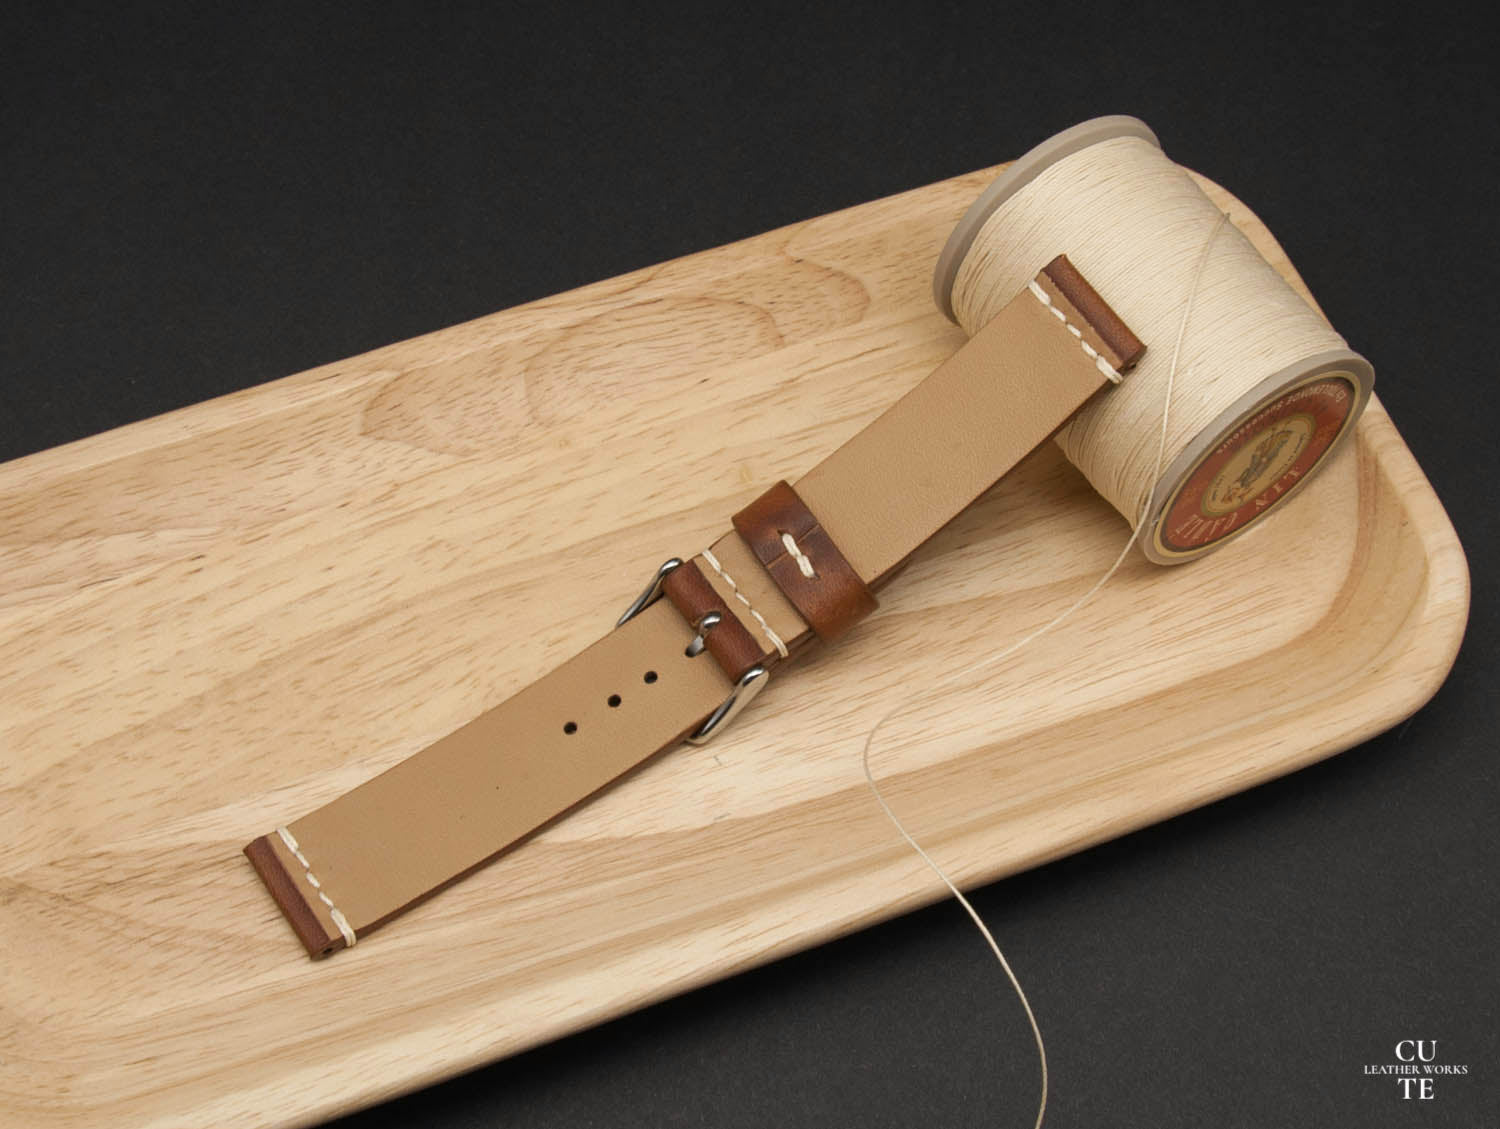 Badalassi Carlo Wax Cognac Leather Watch Strap, Horizontal Stitching